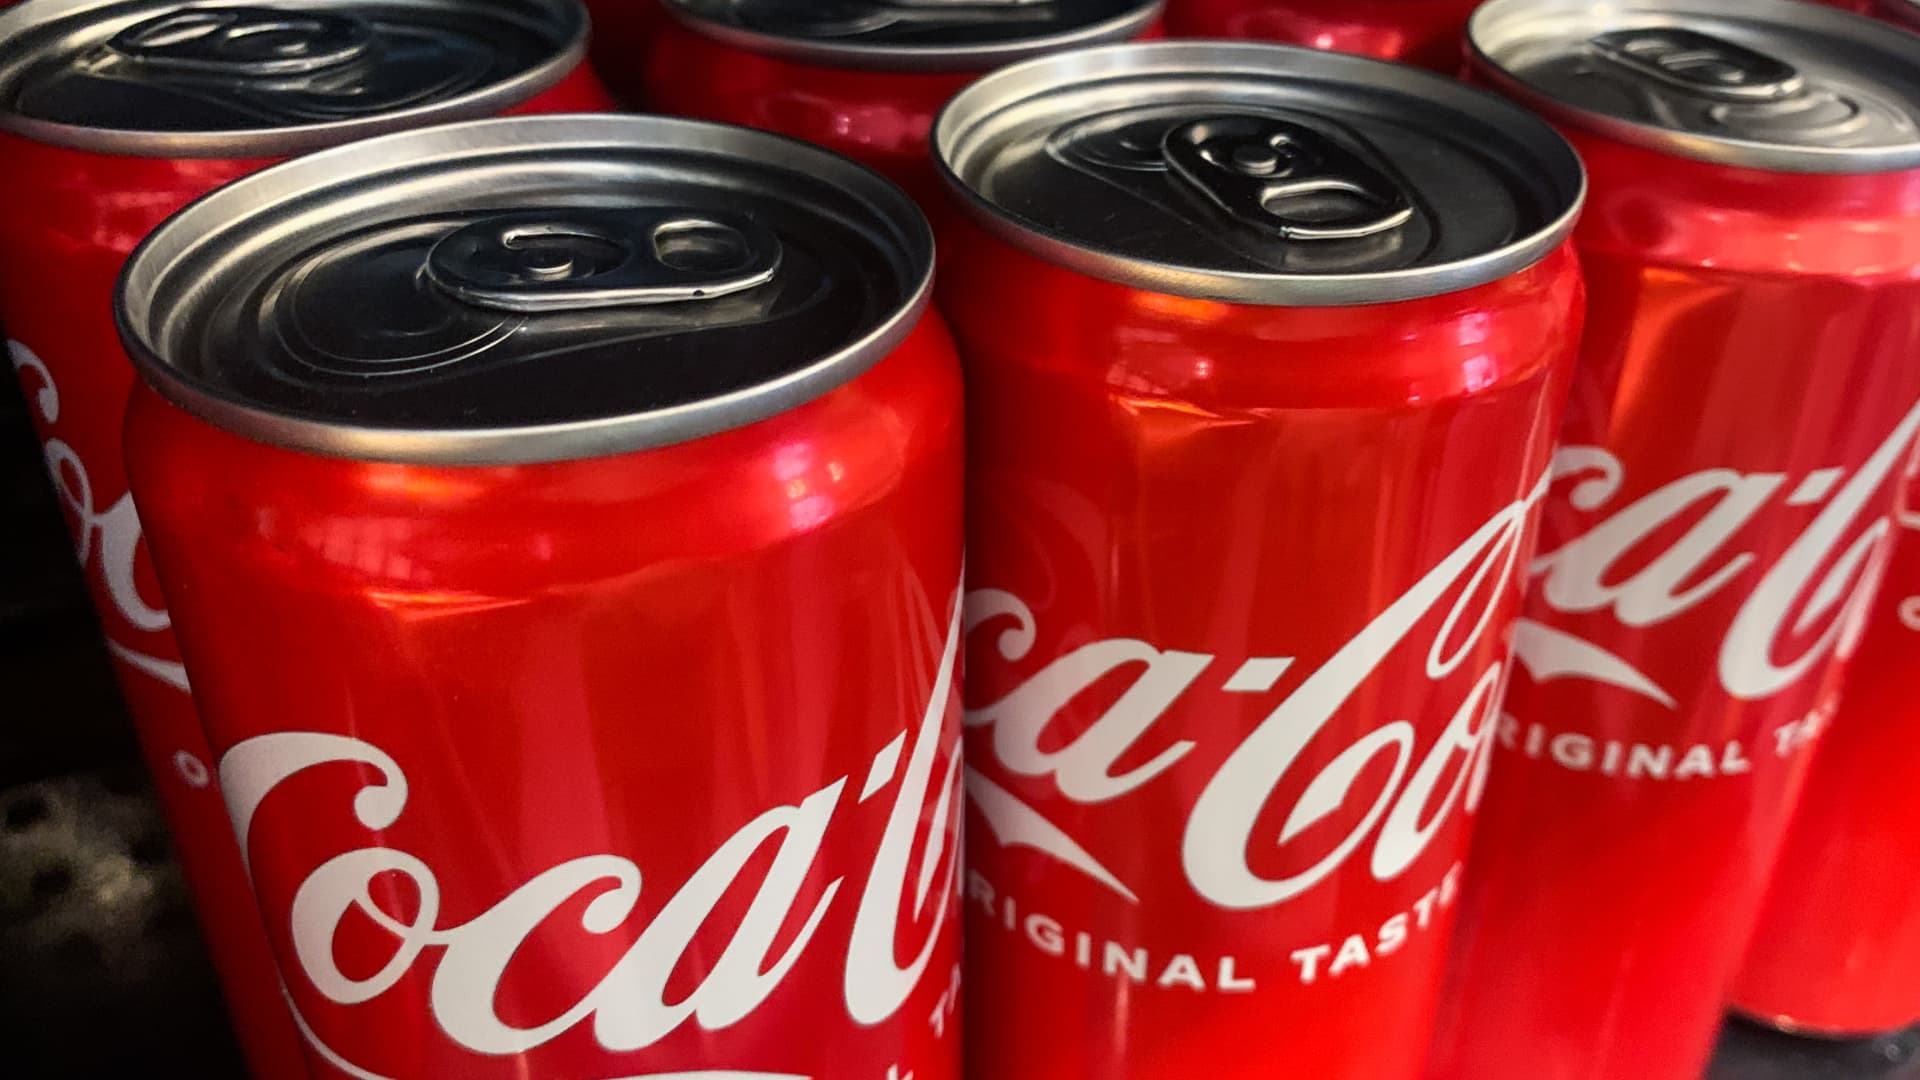 Coca-Cola (KO) Q4 earnings